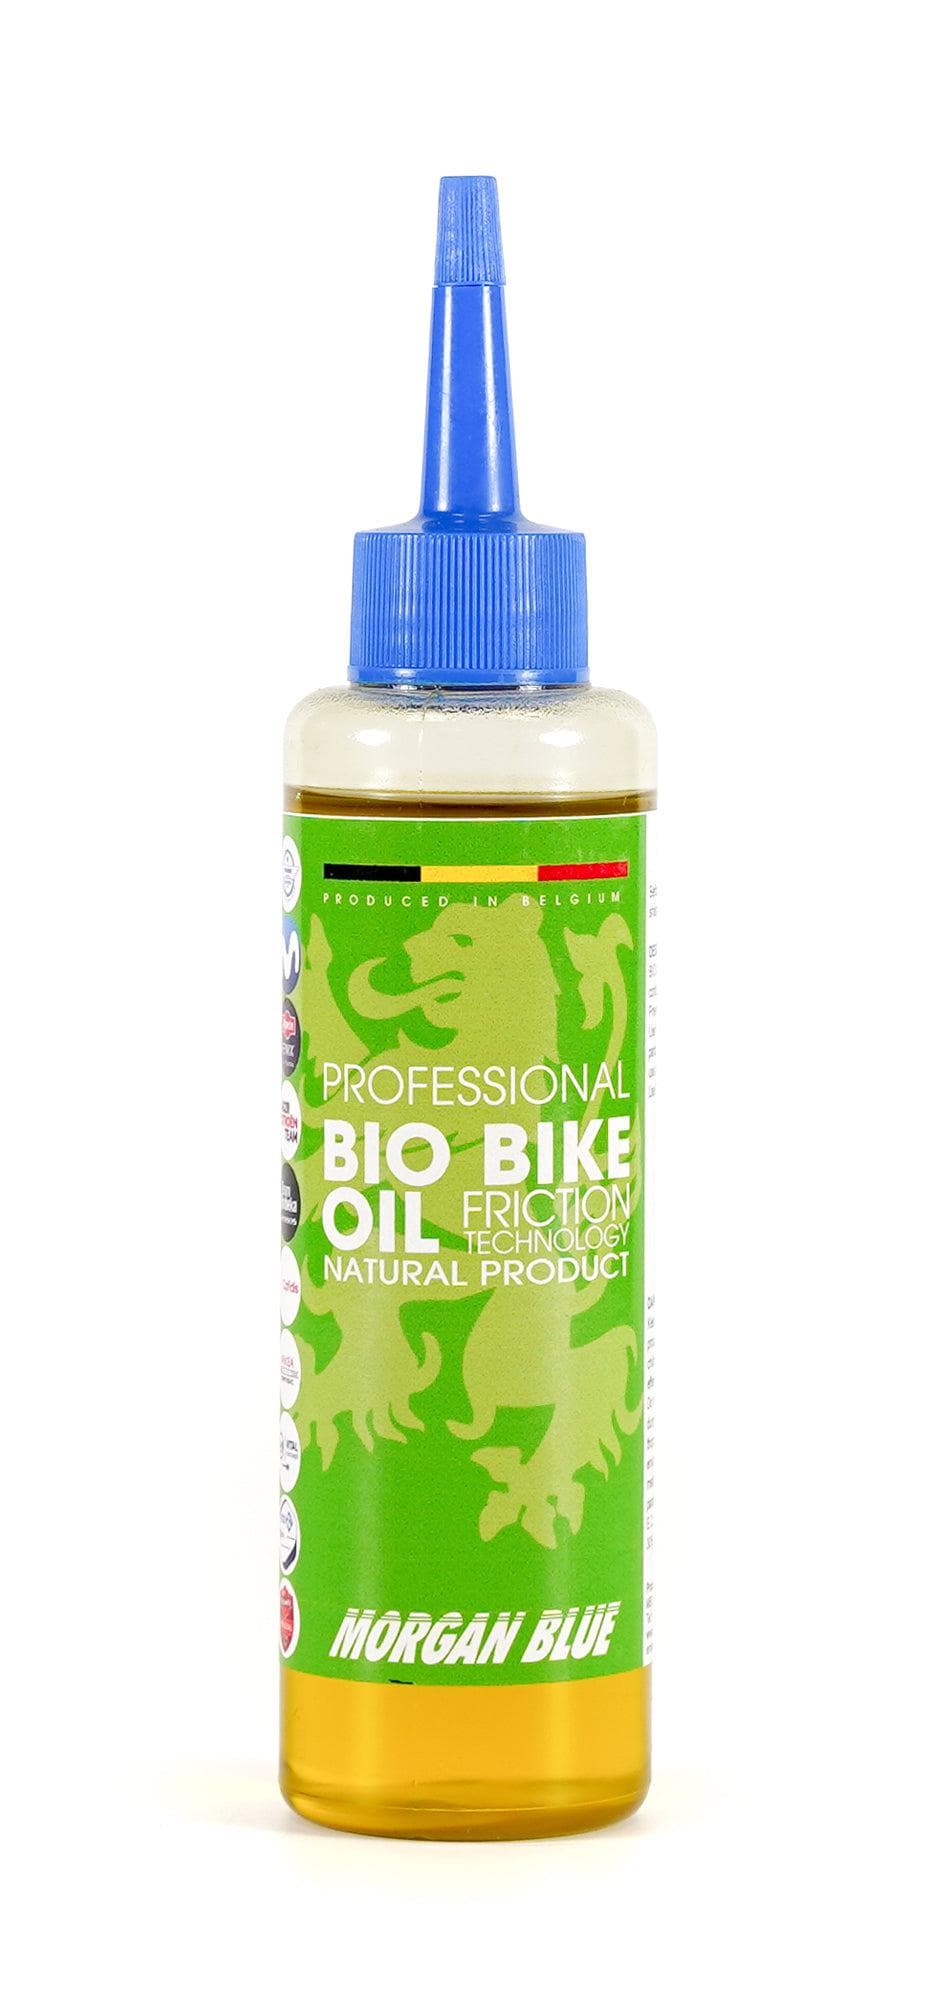 Morgan Blue Bio Bike Oil Friction Technology (125cc, Bottle)